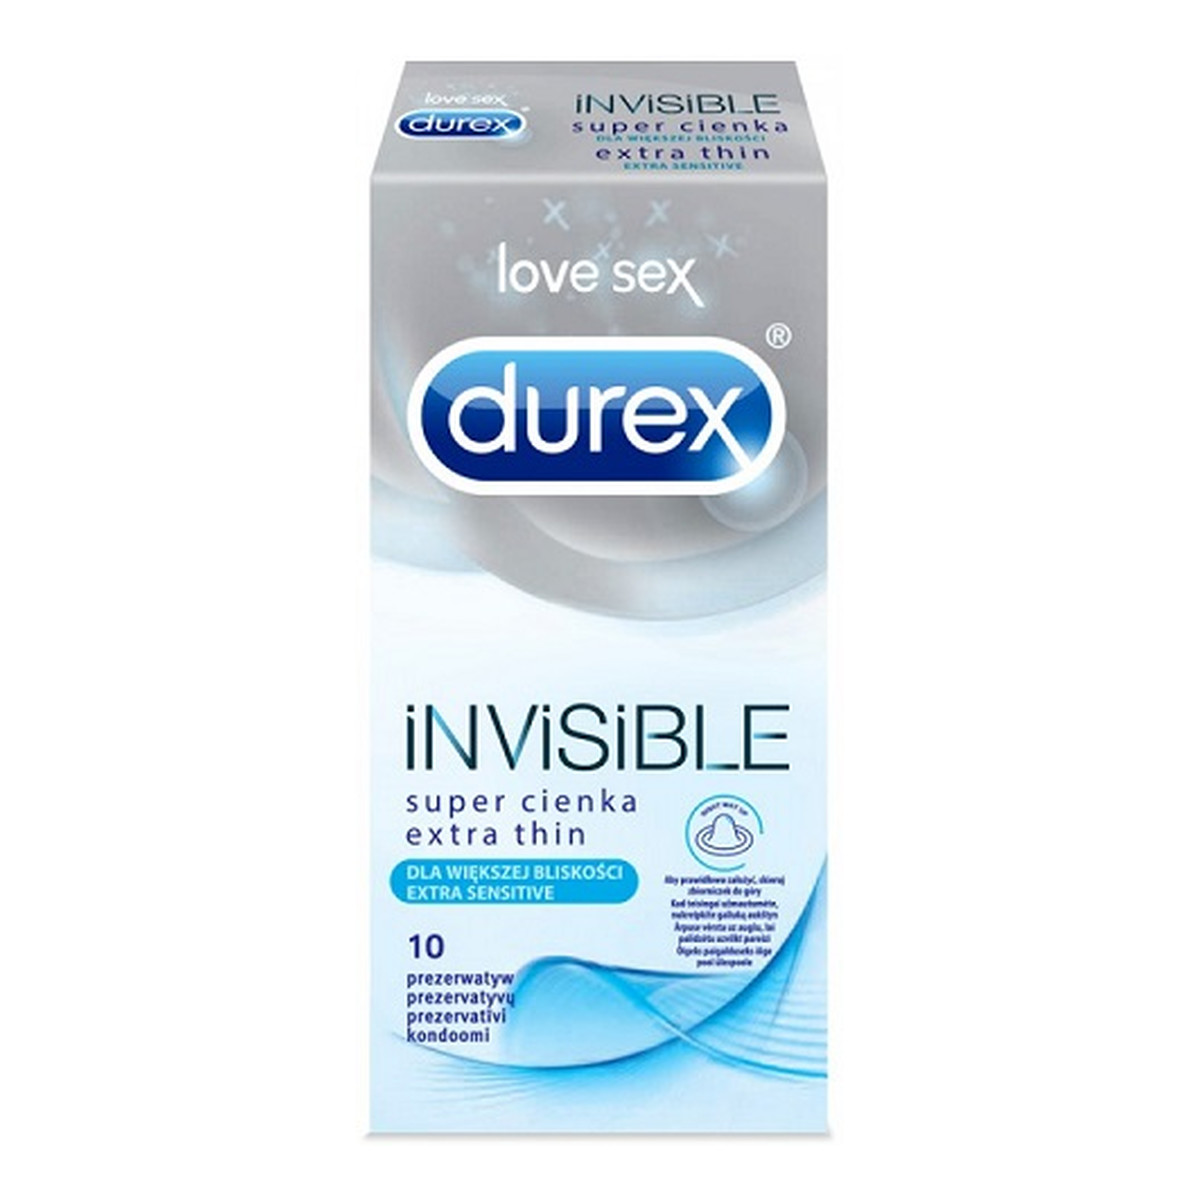 Durex Invisible Extra Thin super cienkie prezerwatywy 10szt